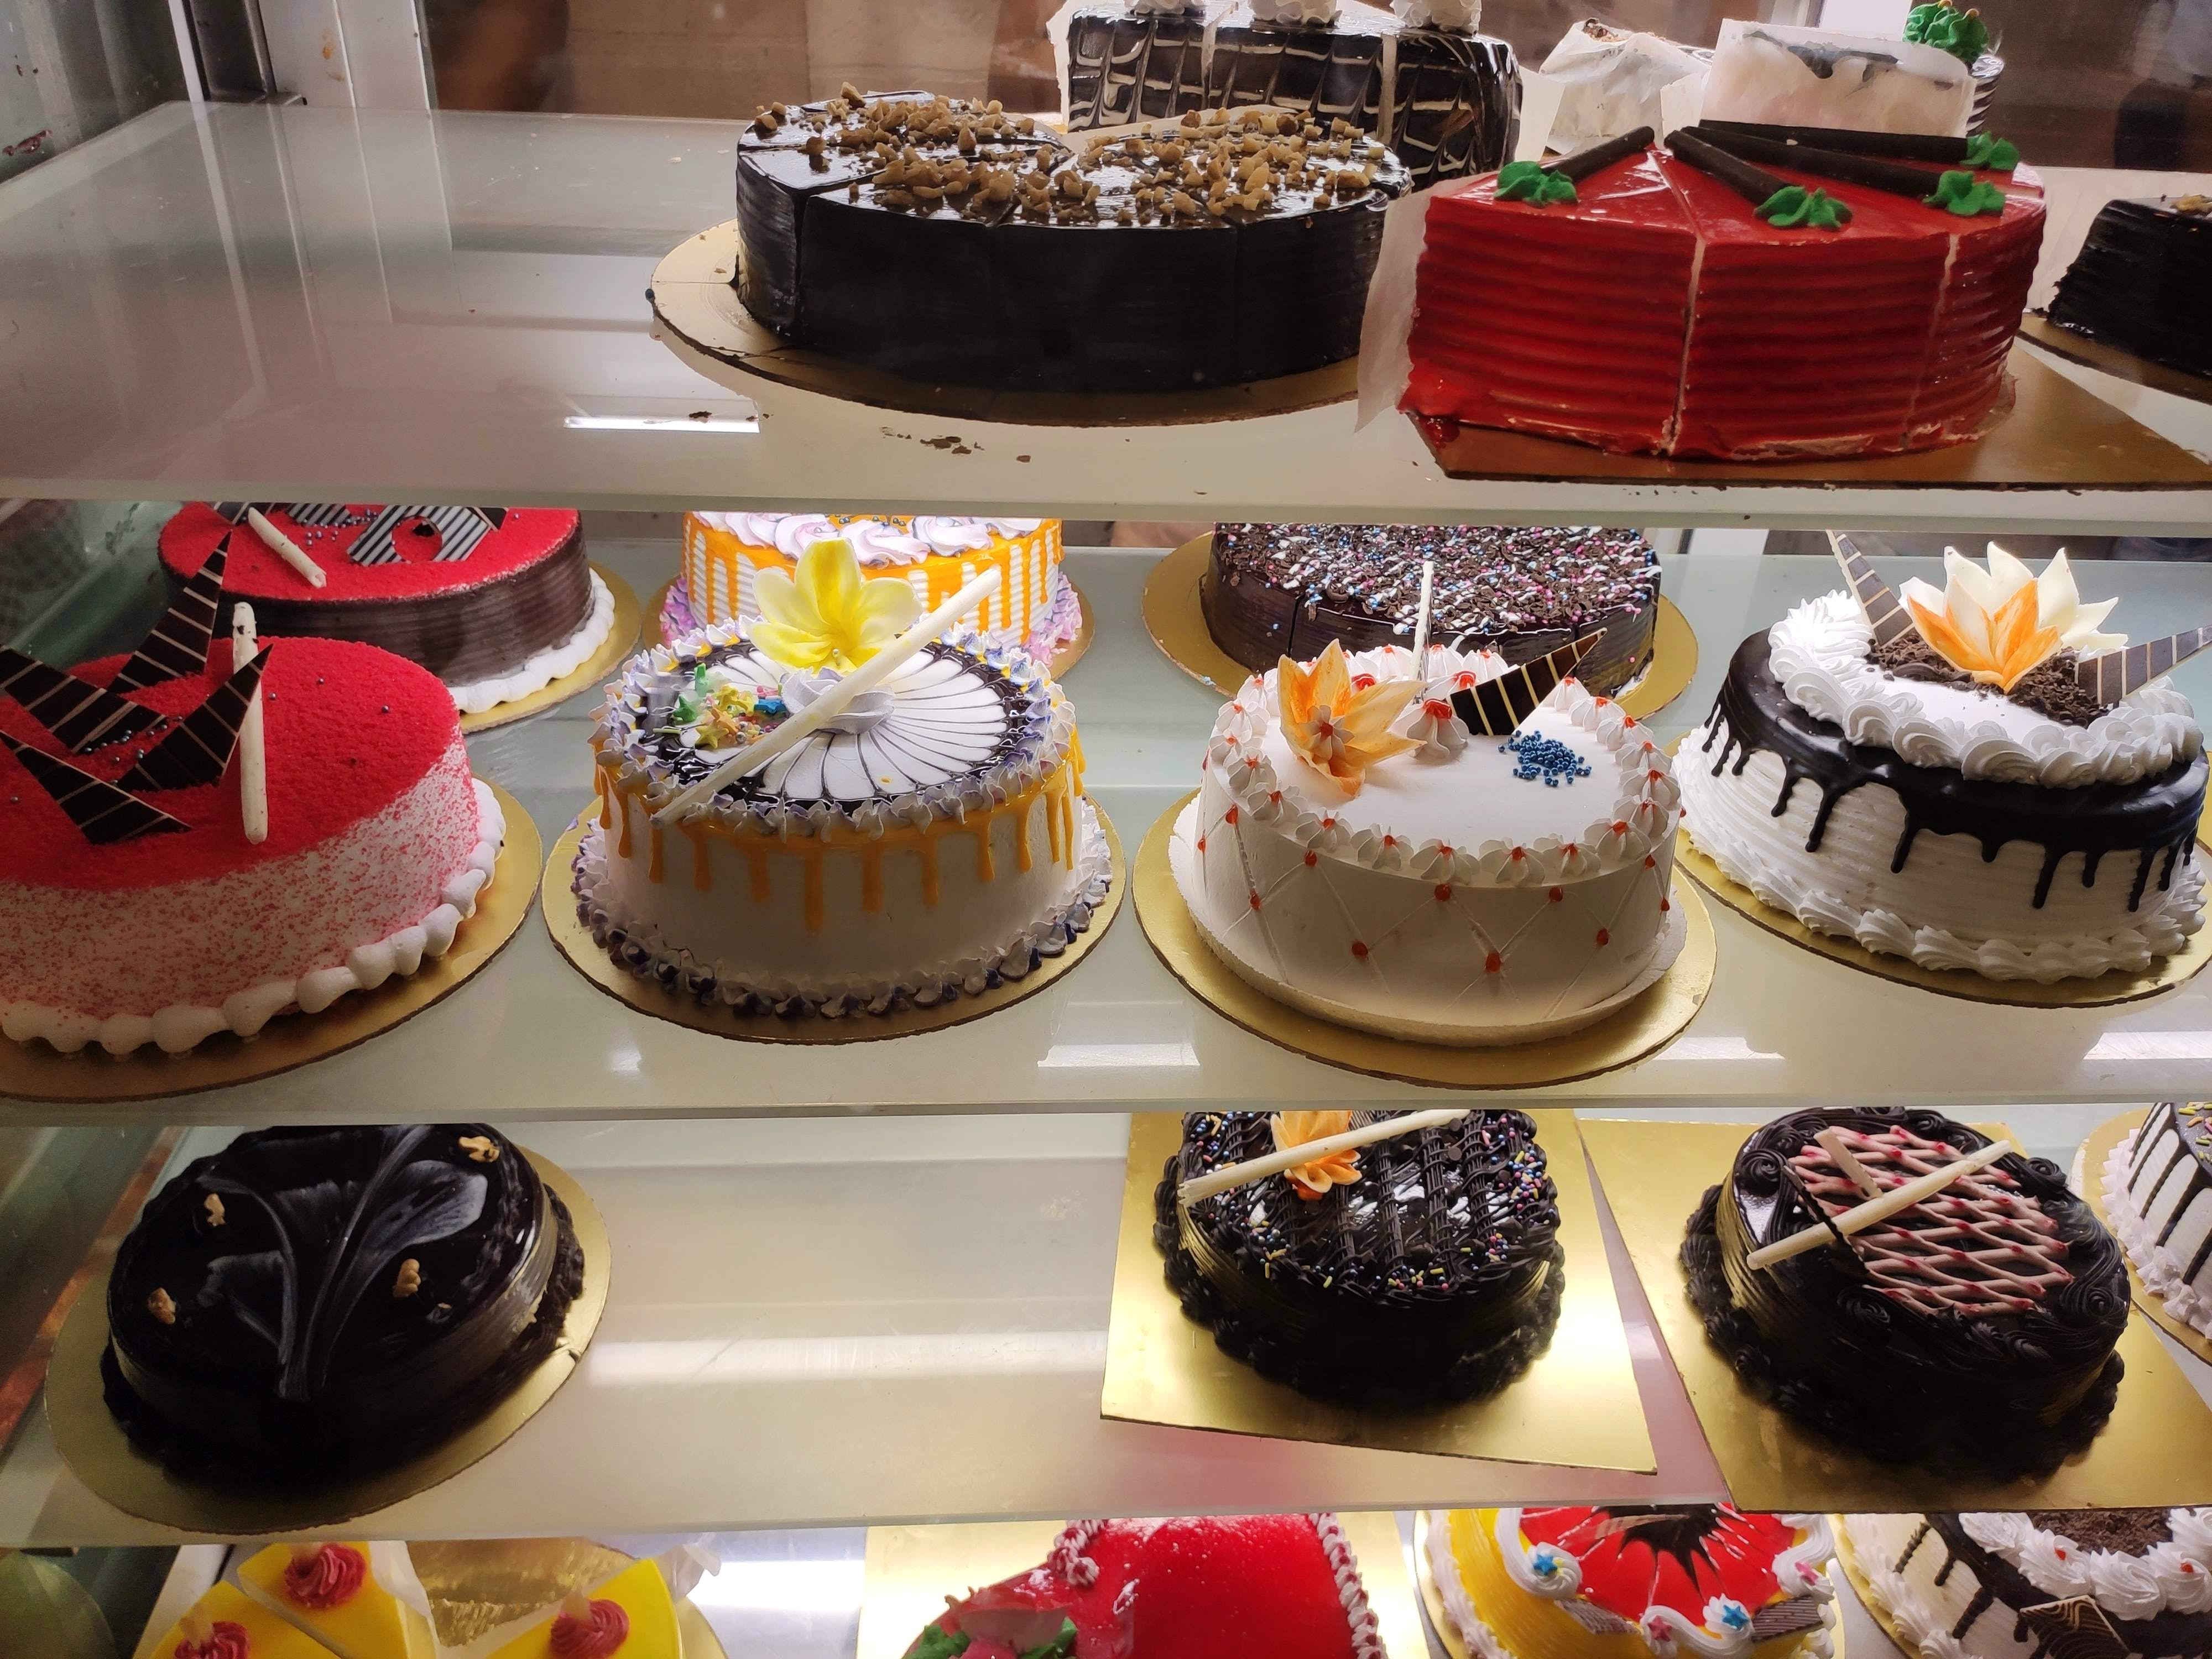 7th Heaven Cake Shop Mangalore. | Facebook